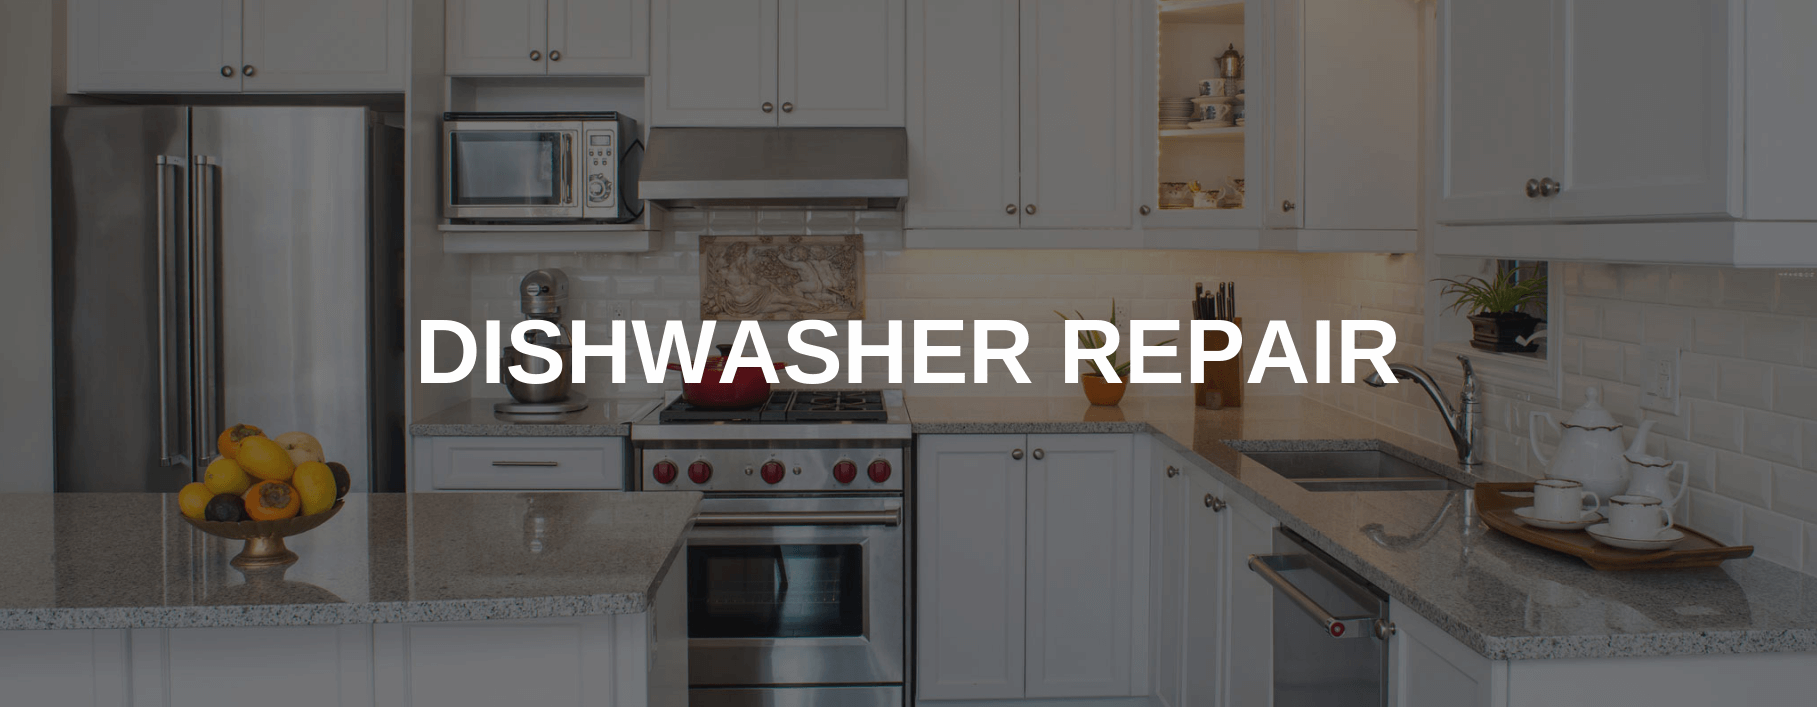 dishwasher repair simi valley